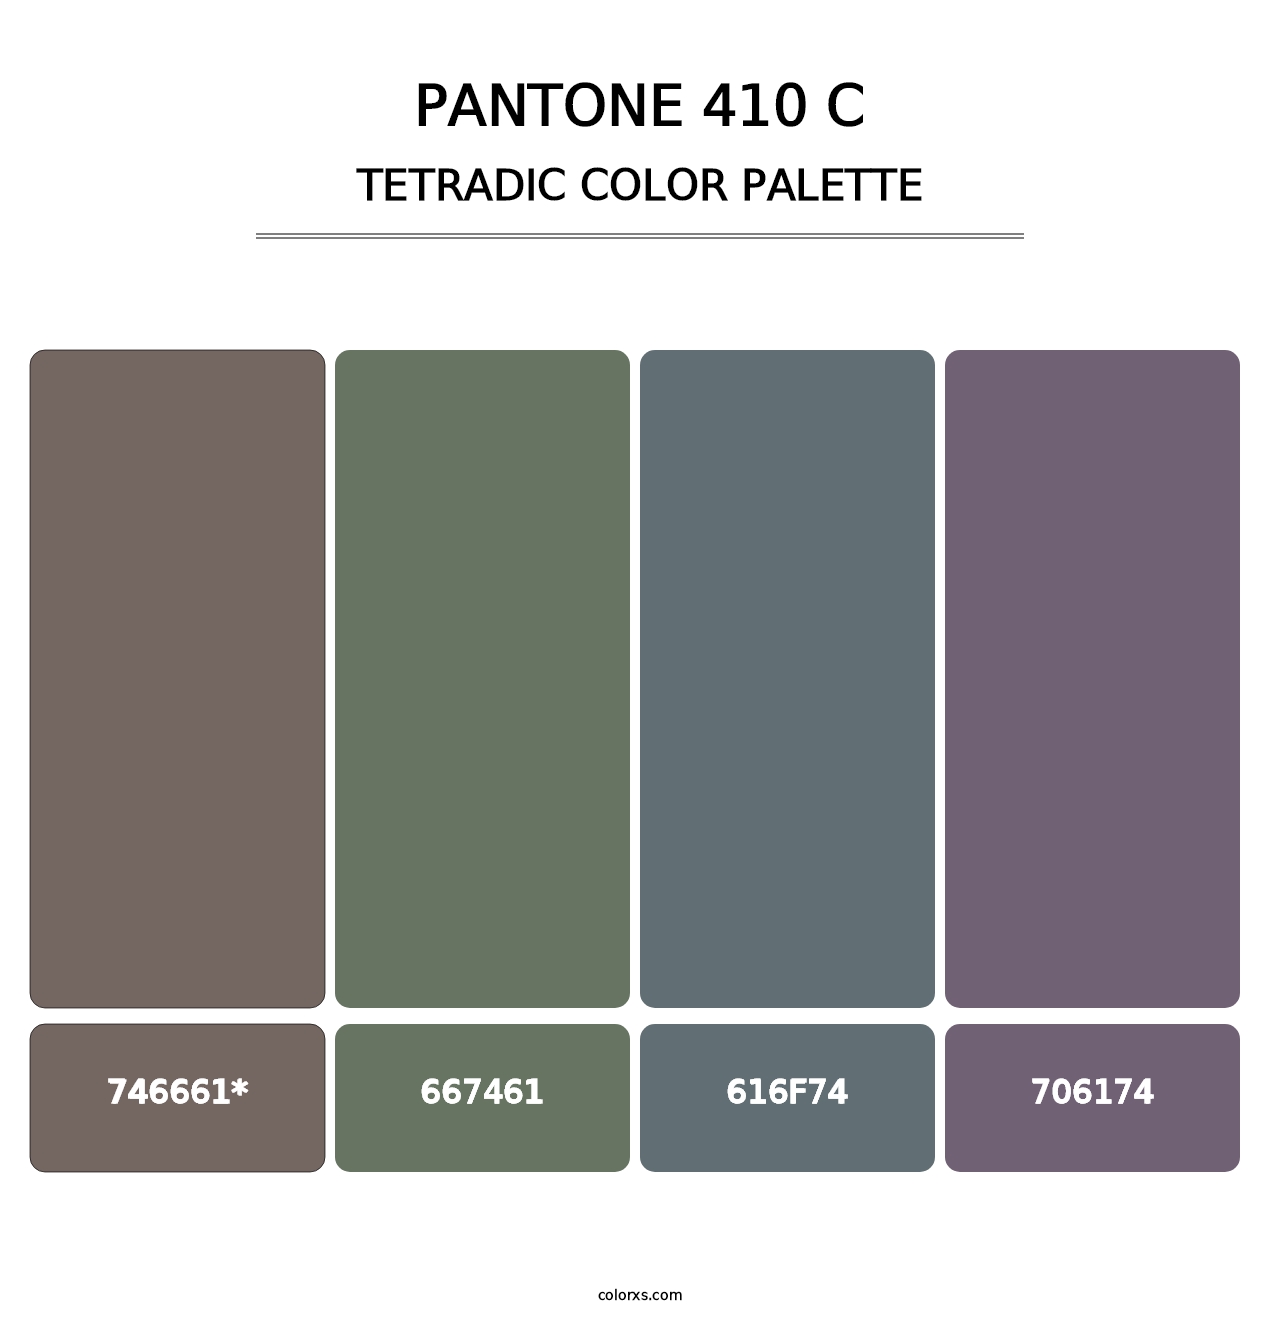 PANTONE 410 C - Tetradic Color Palette